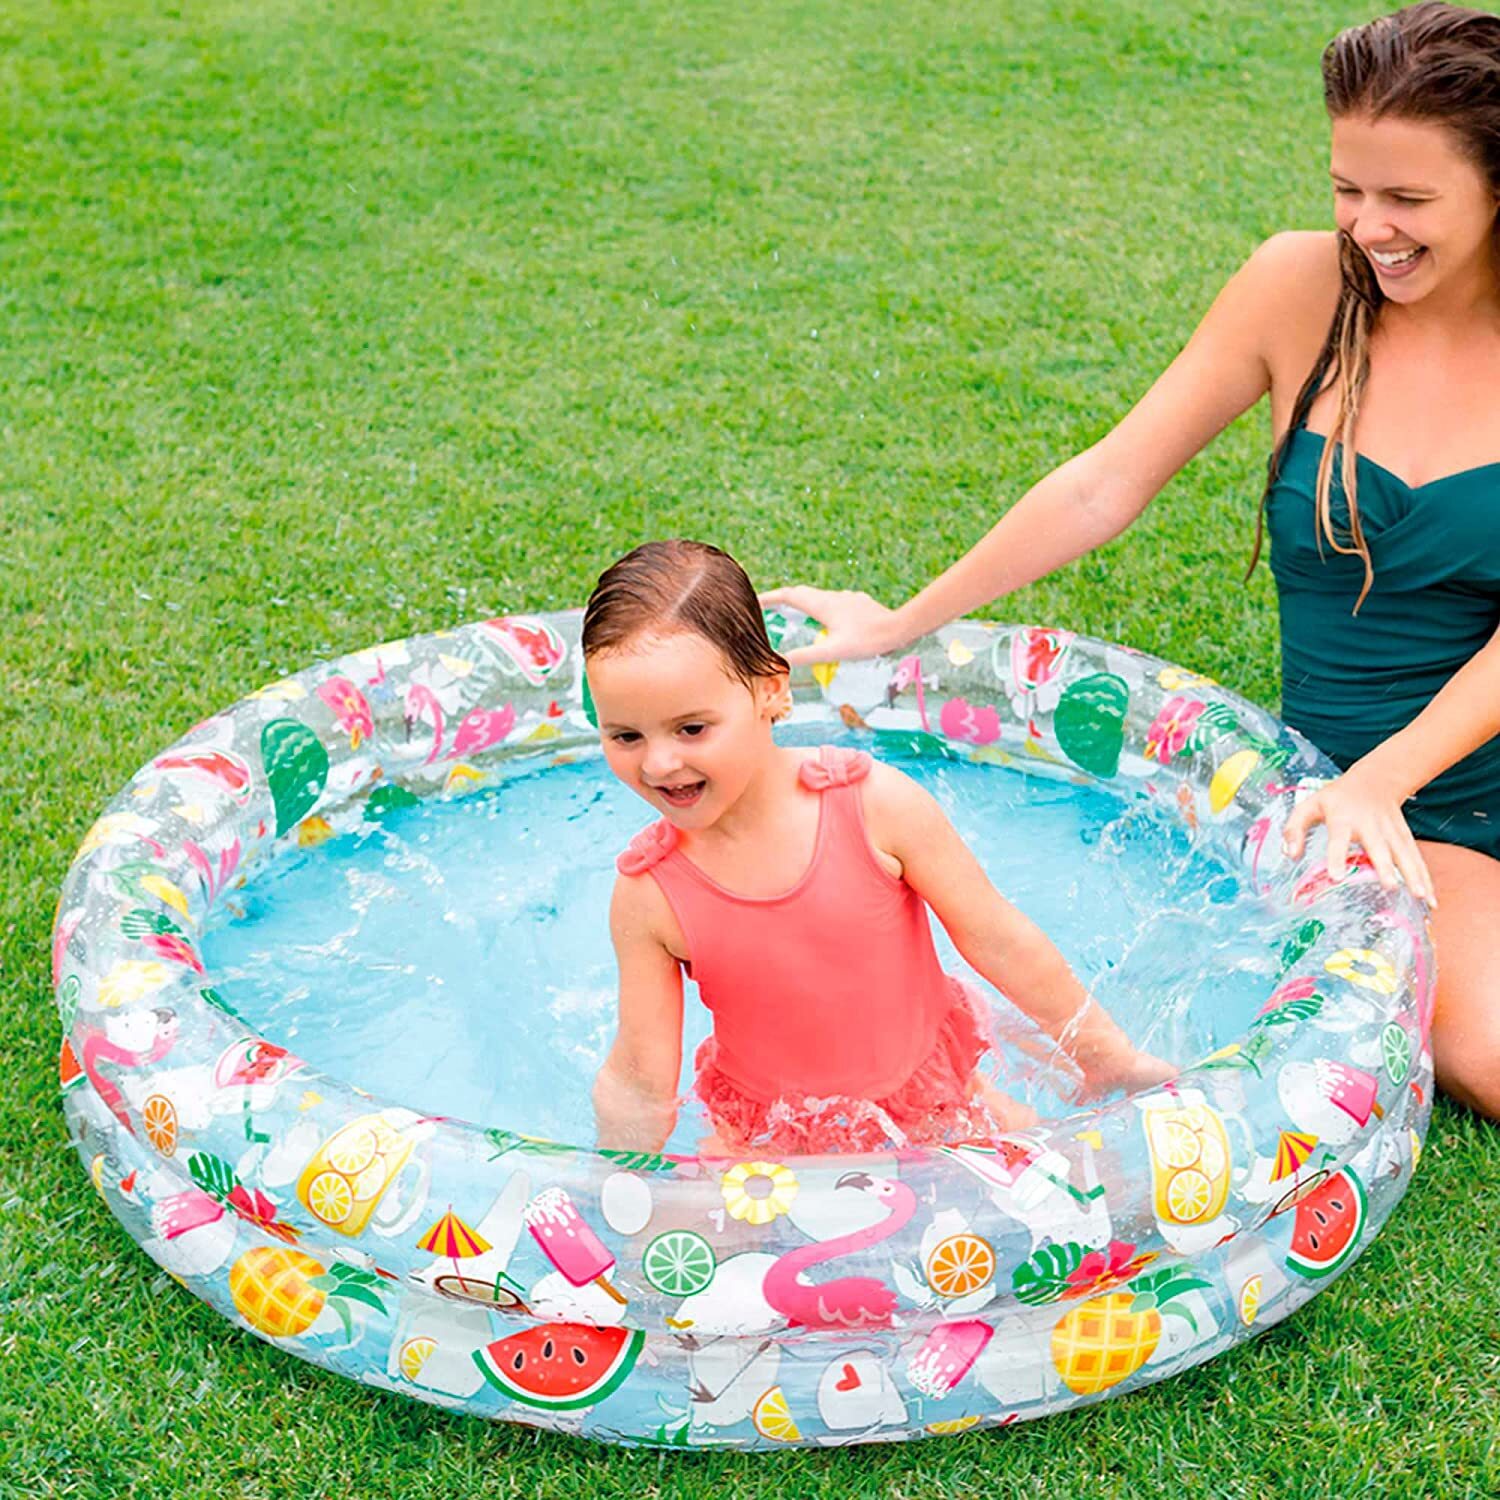 Toddler and parent enjoying the pool